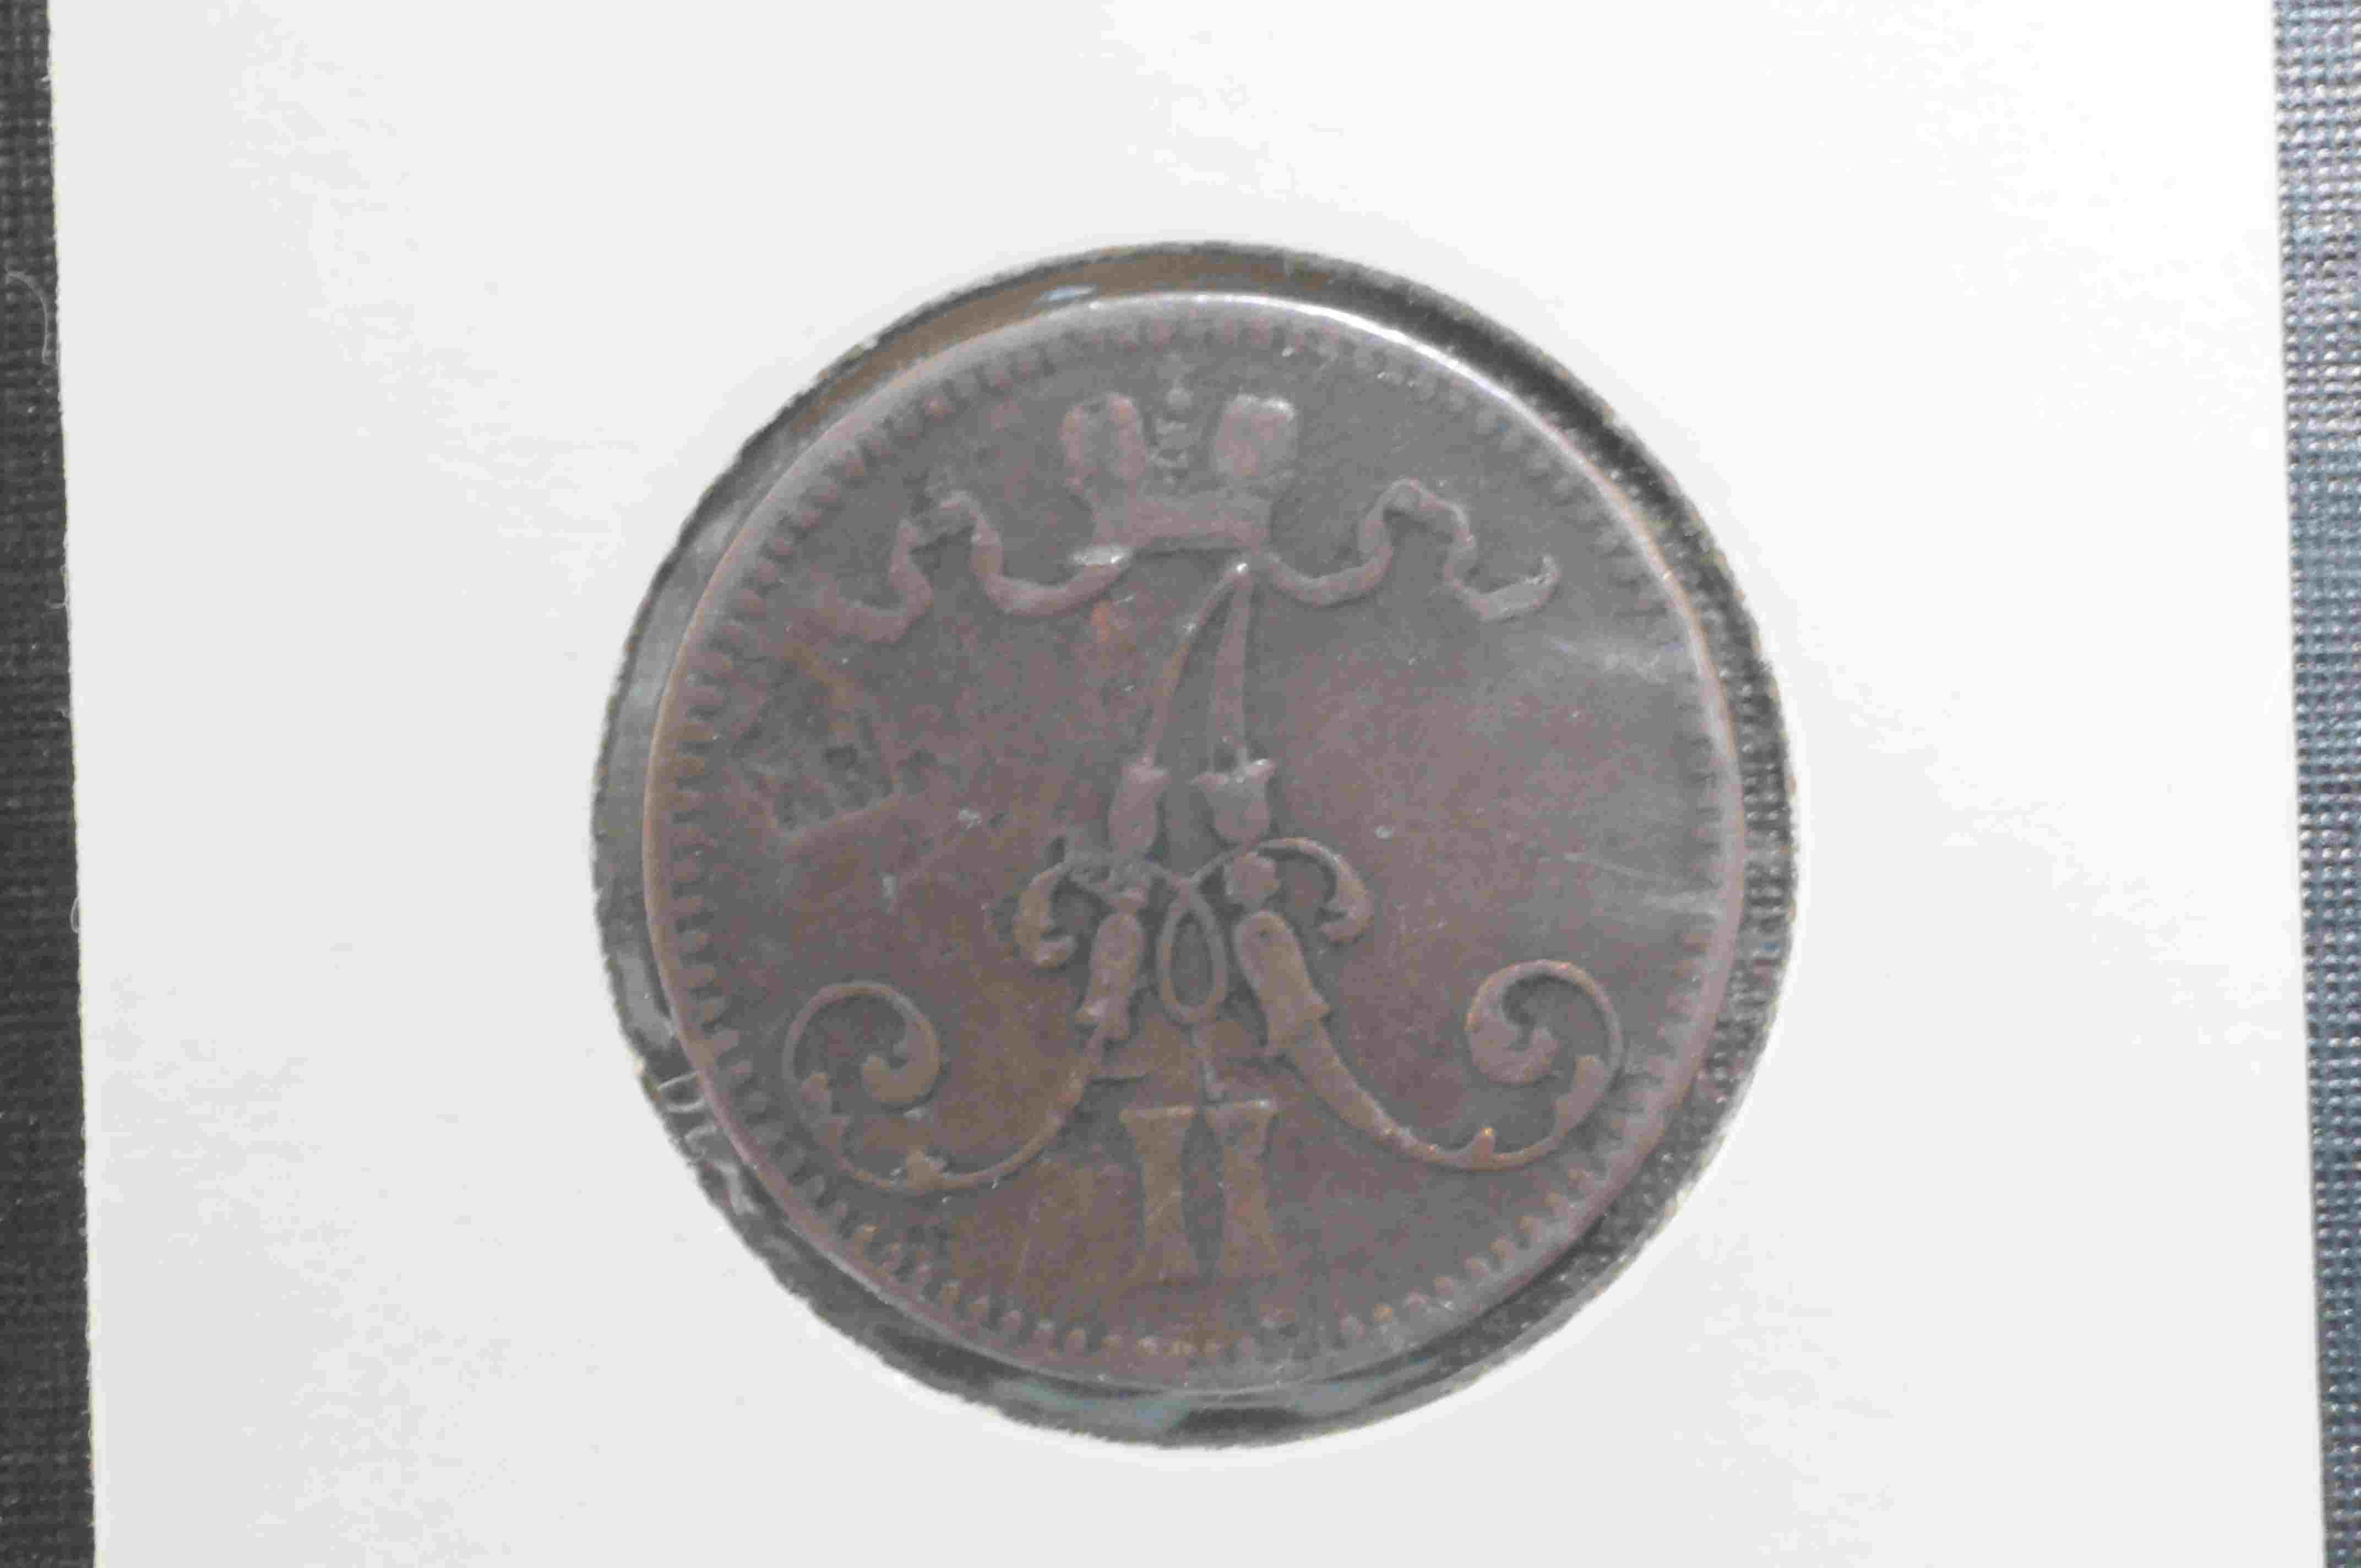 Fin 5 Penni 1865 kv1